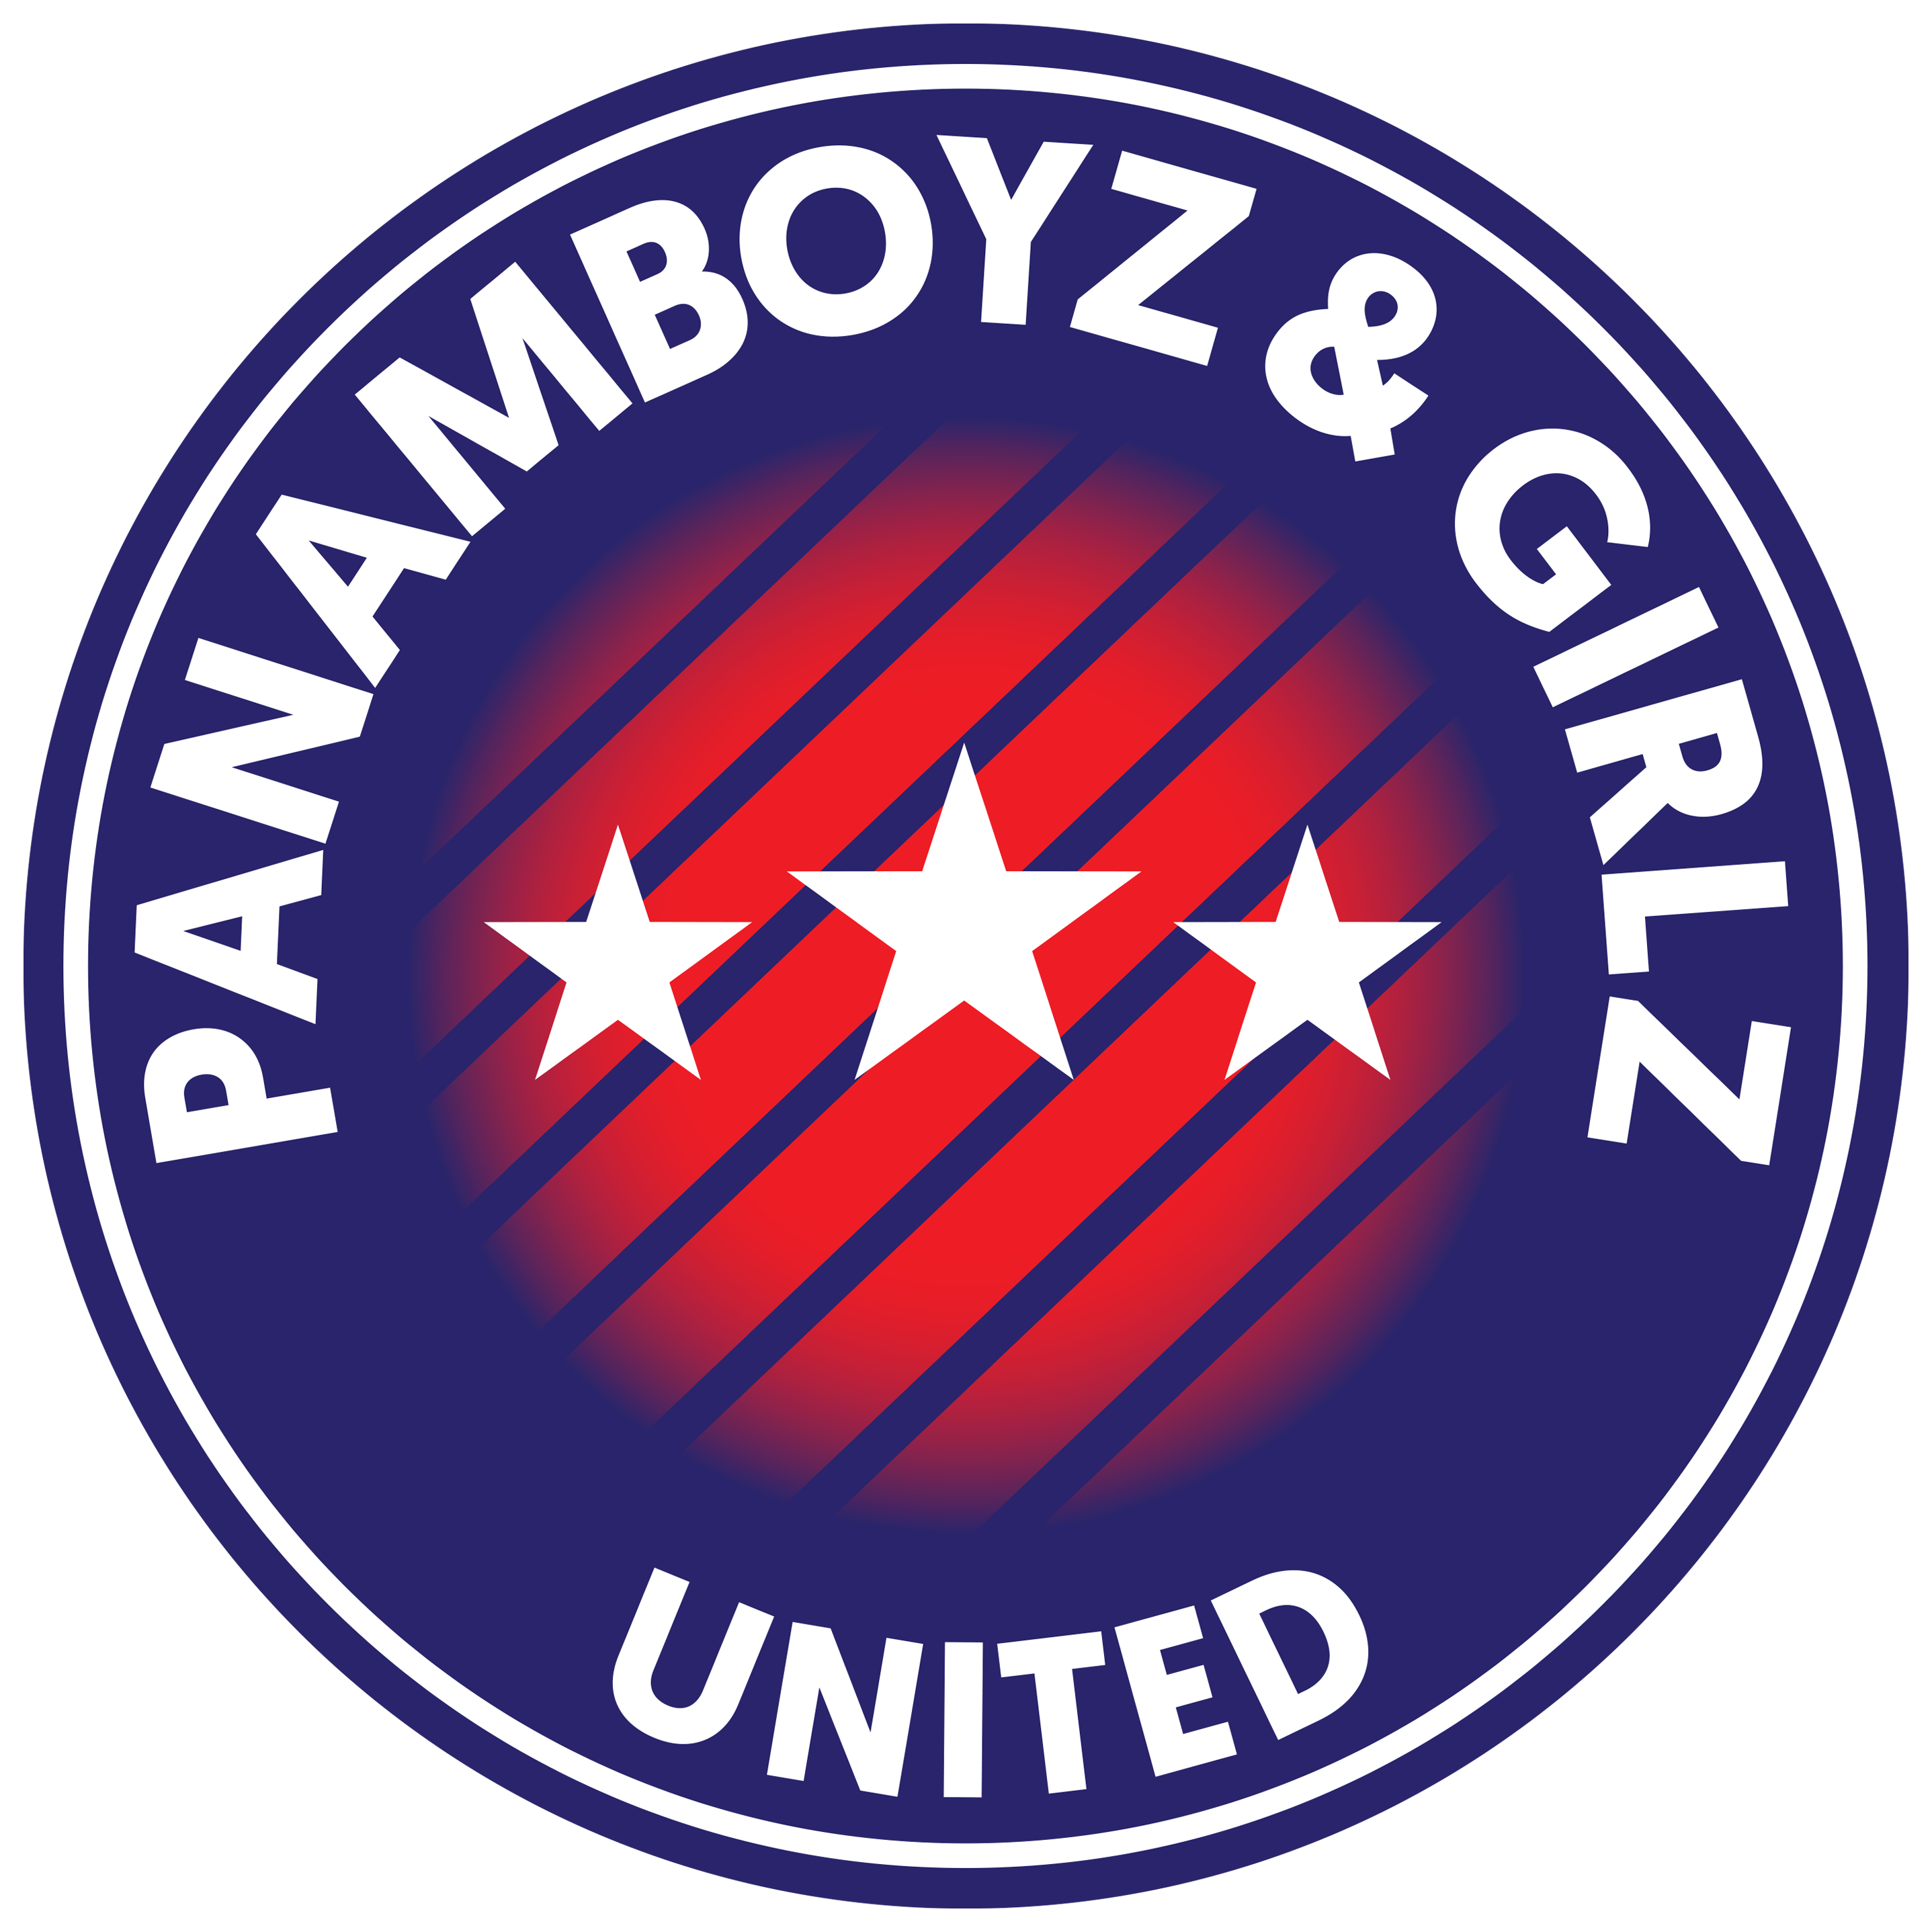 Panamboyz and Girlz United, Partenaire Officiel Sportif